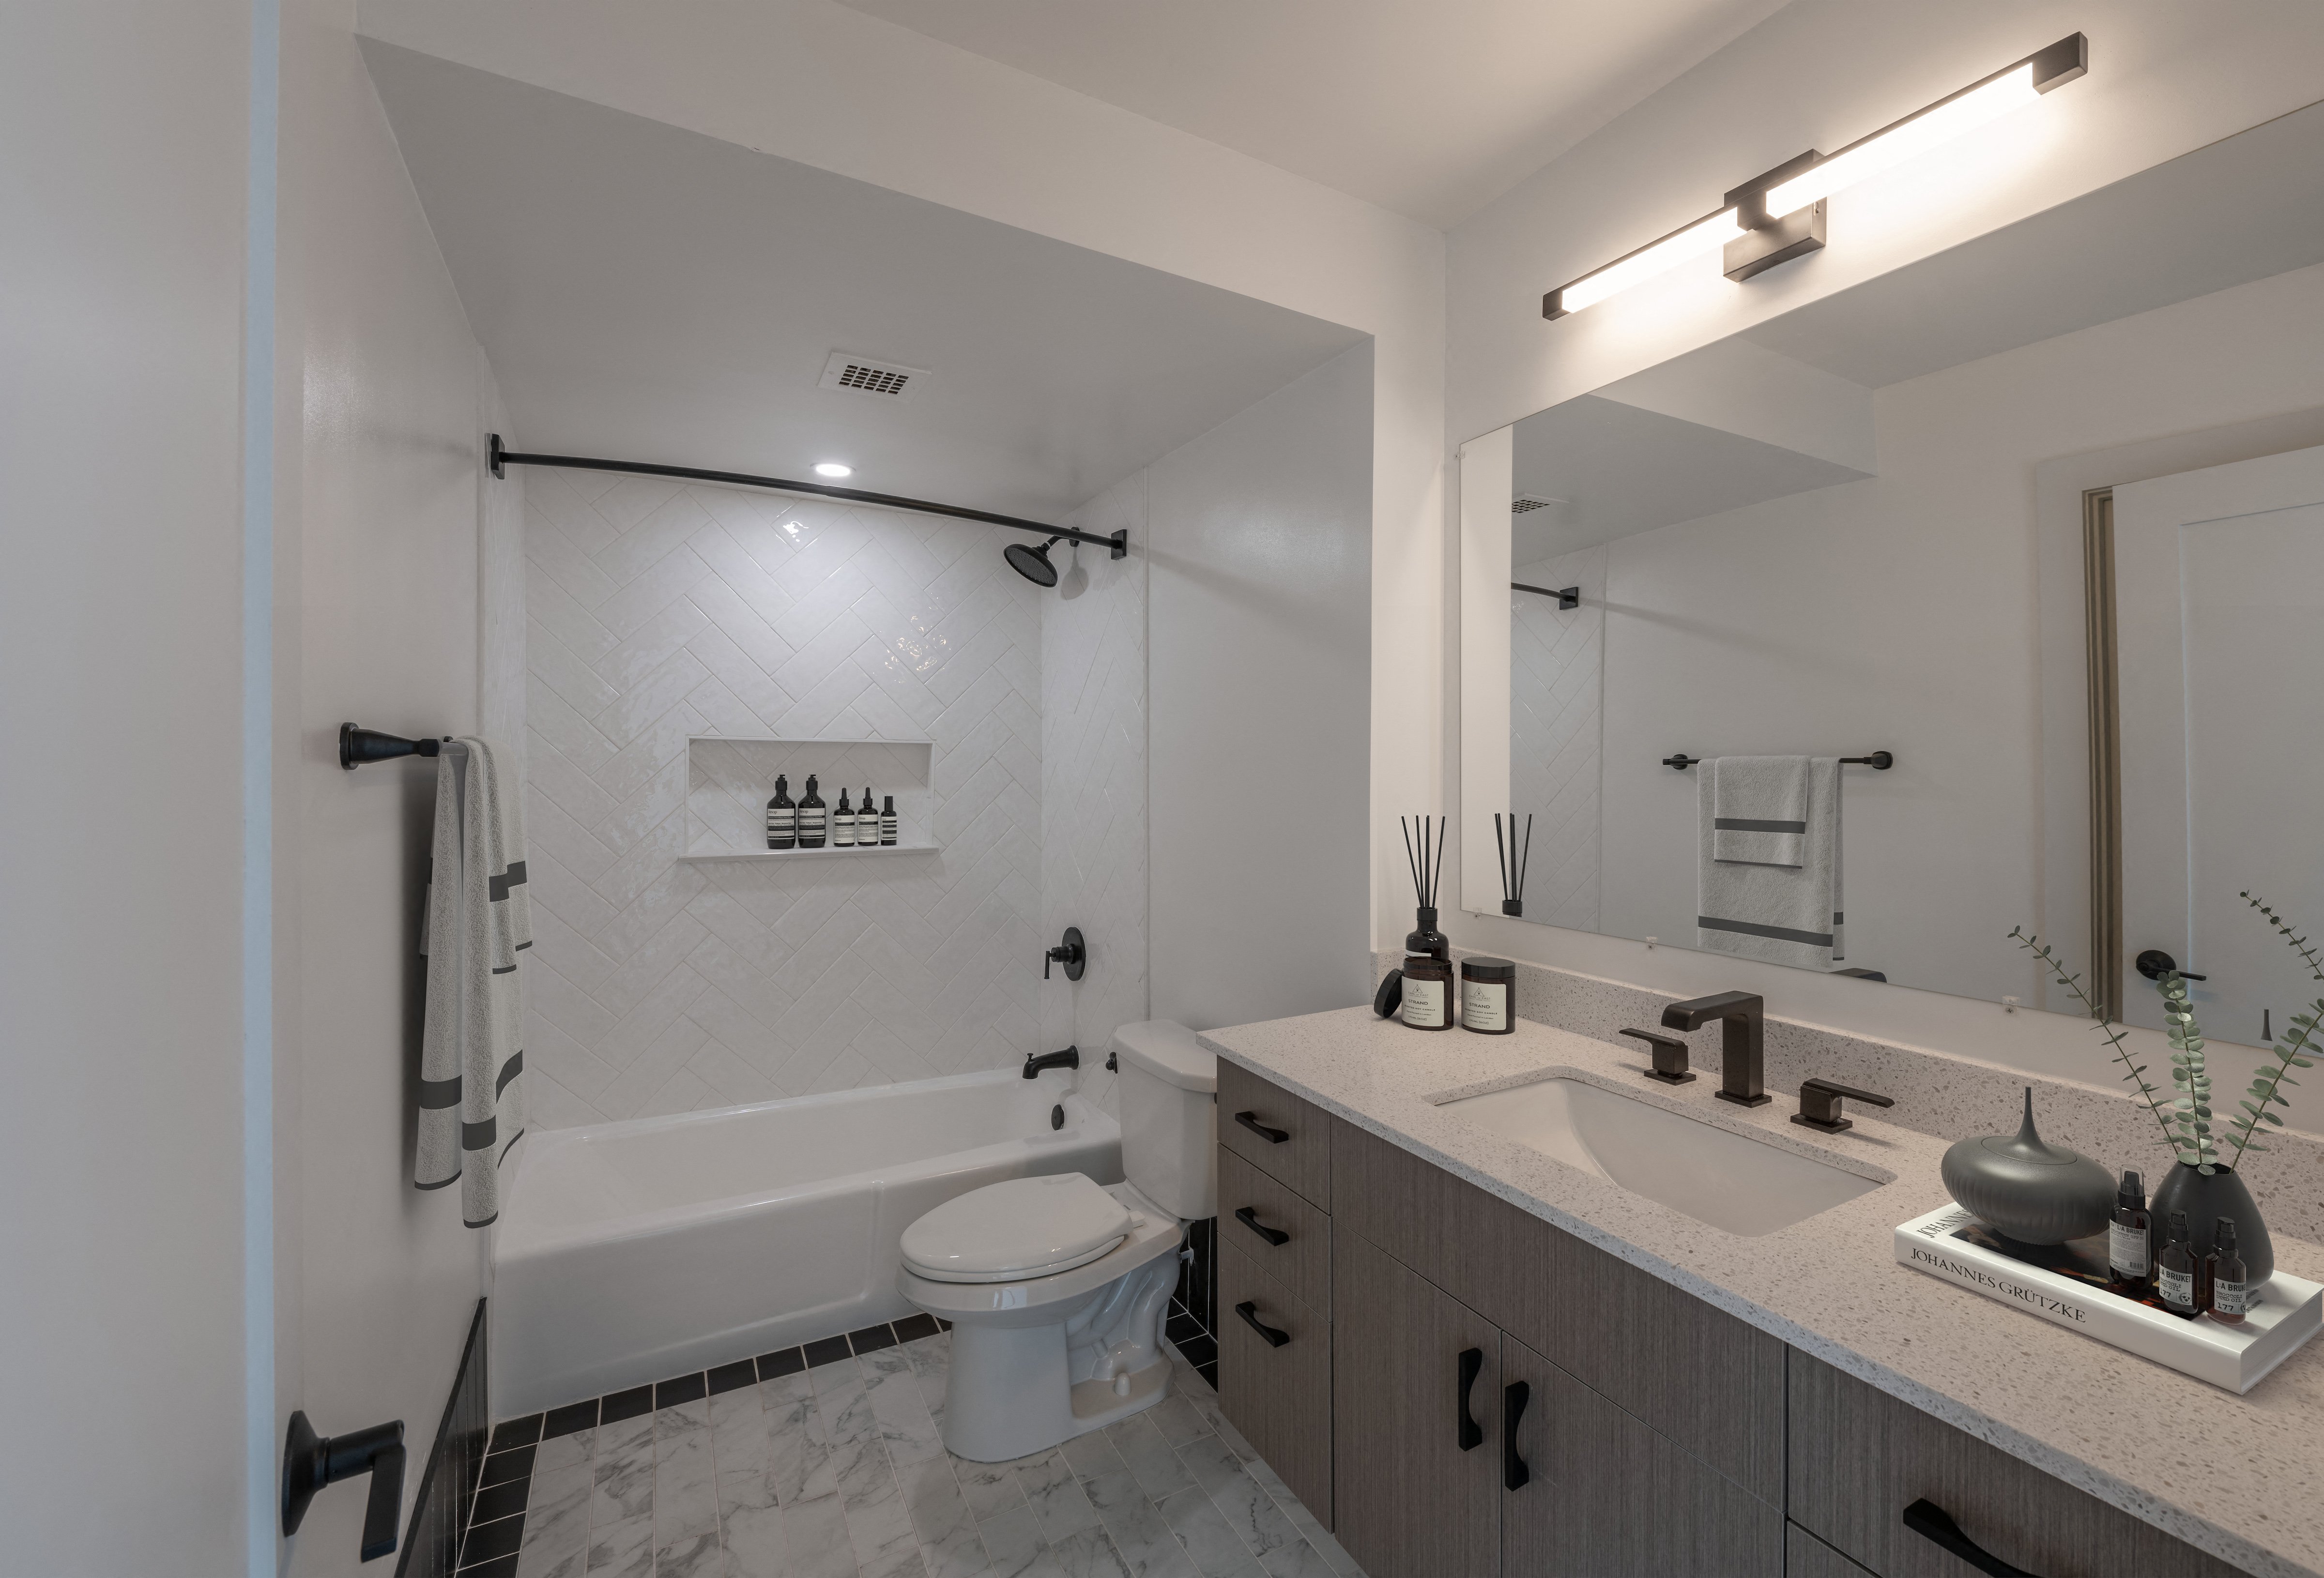 Premium Black Finish - tile-crafted bathrooms providing spa-like retreat